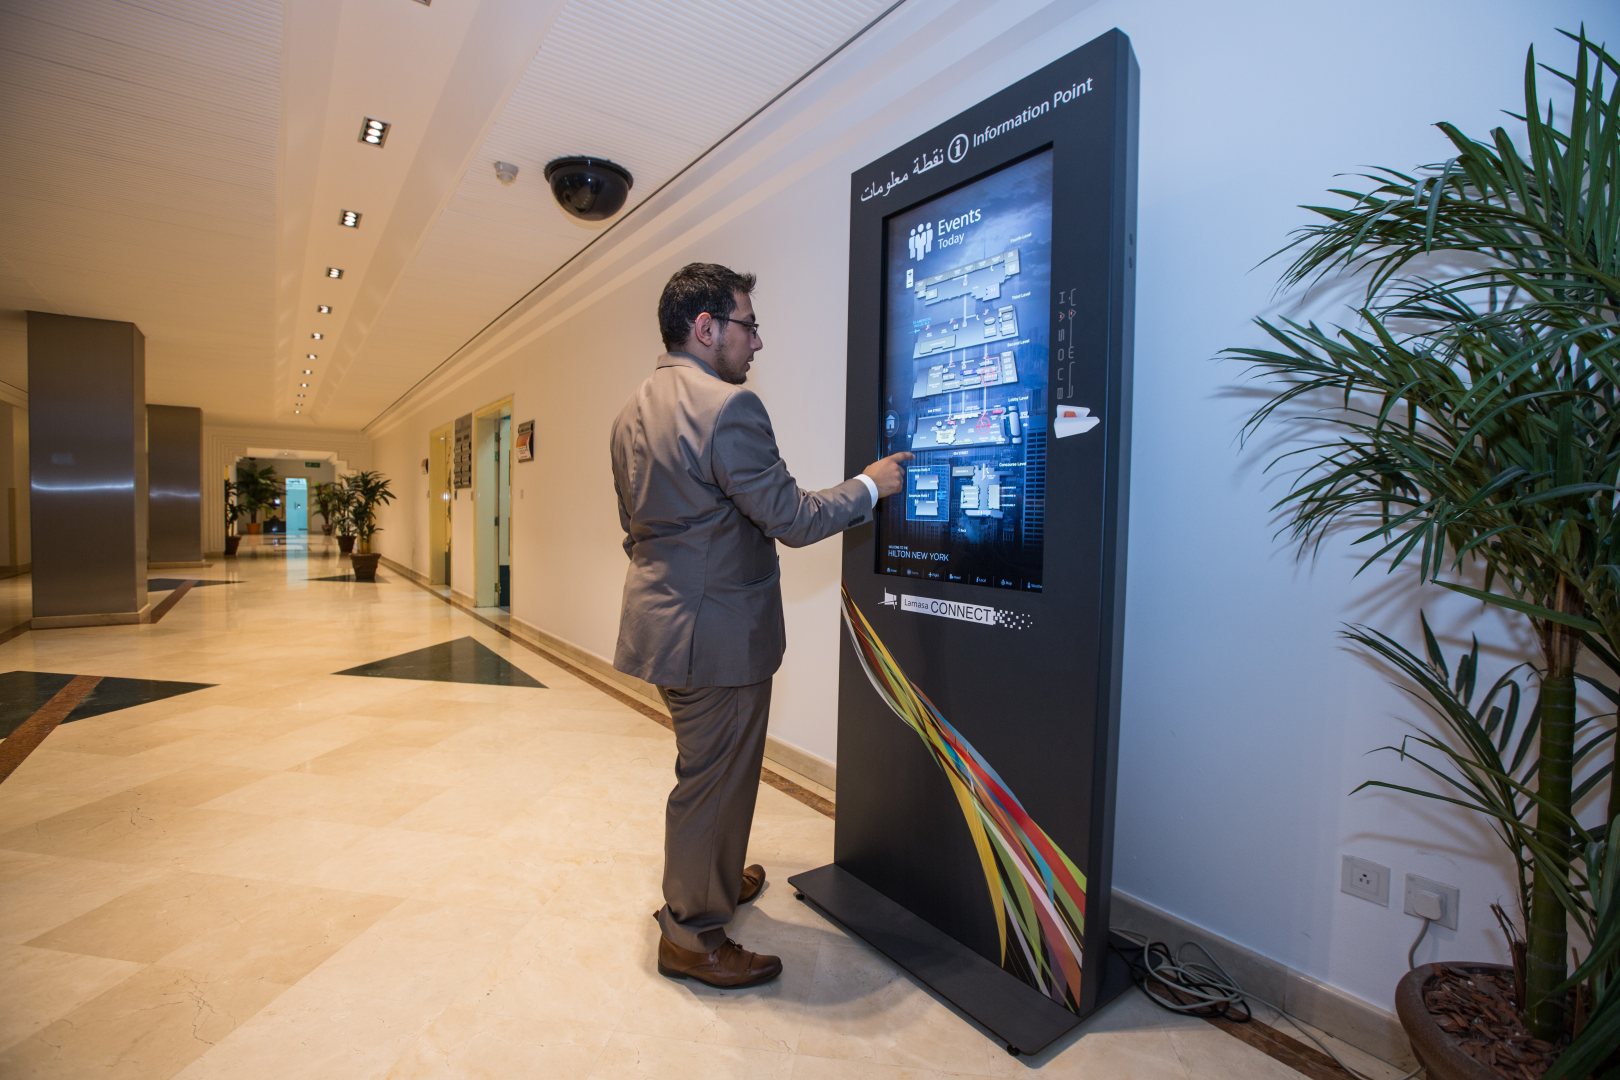 airport saudi arabia interactive information kiosk